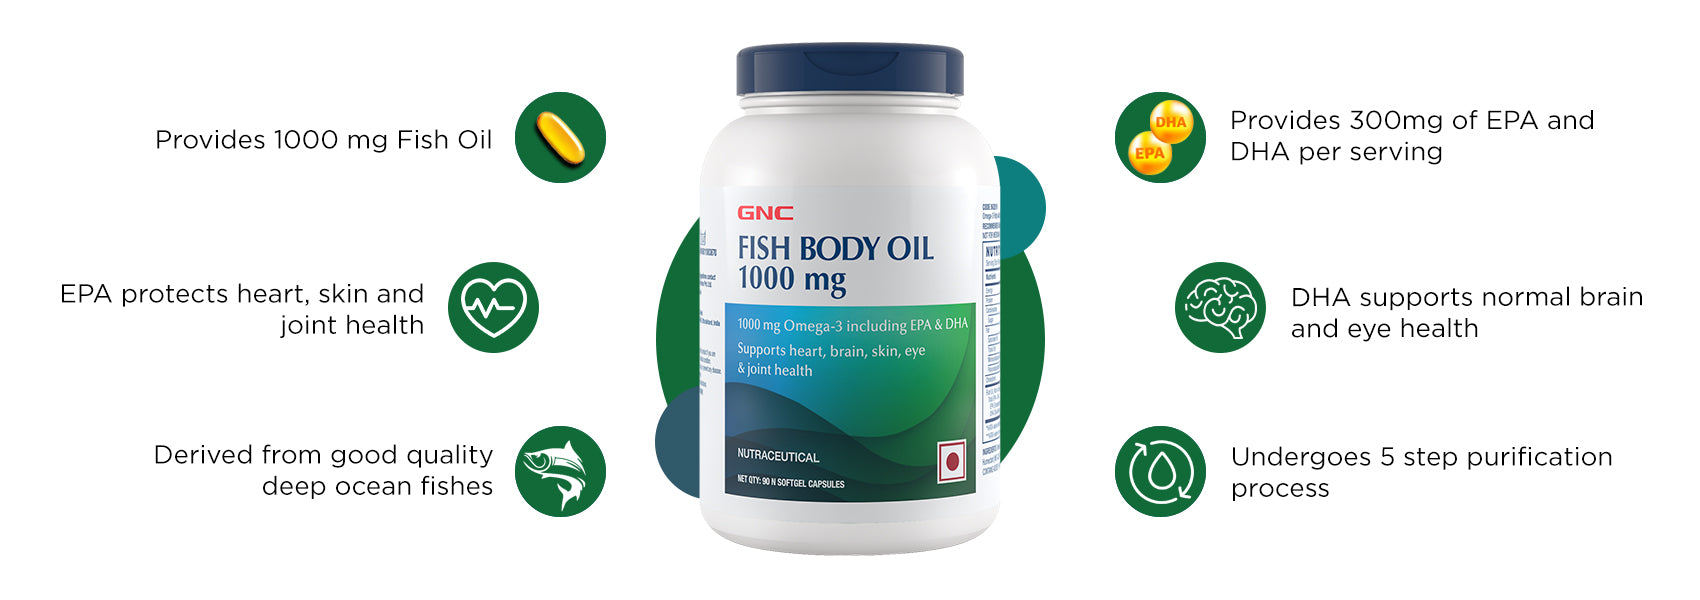 Benefits of GNC Fish Body Oil